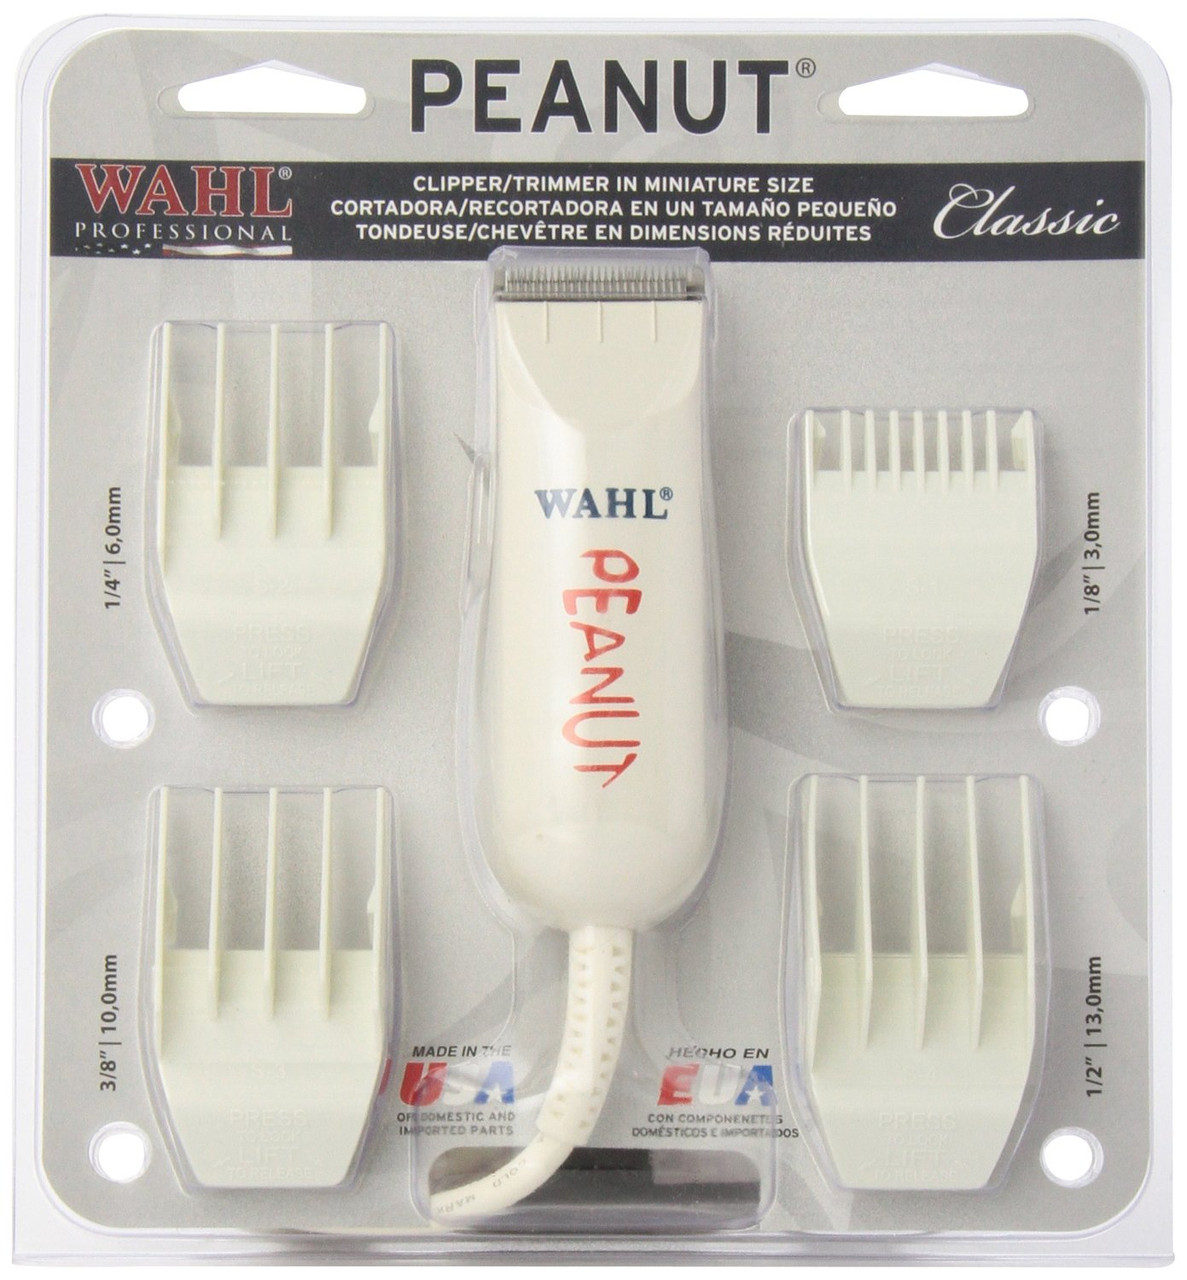 peanut white clipper & trimmer